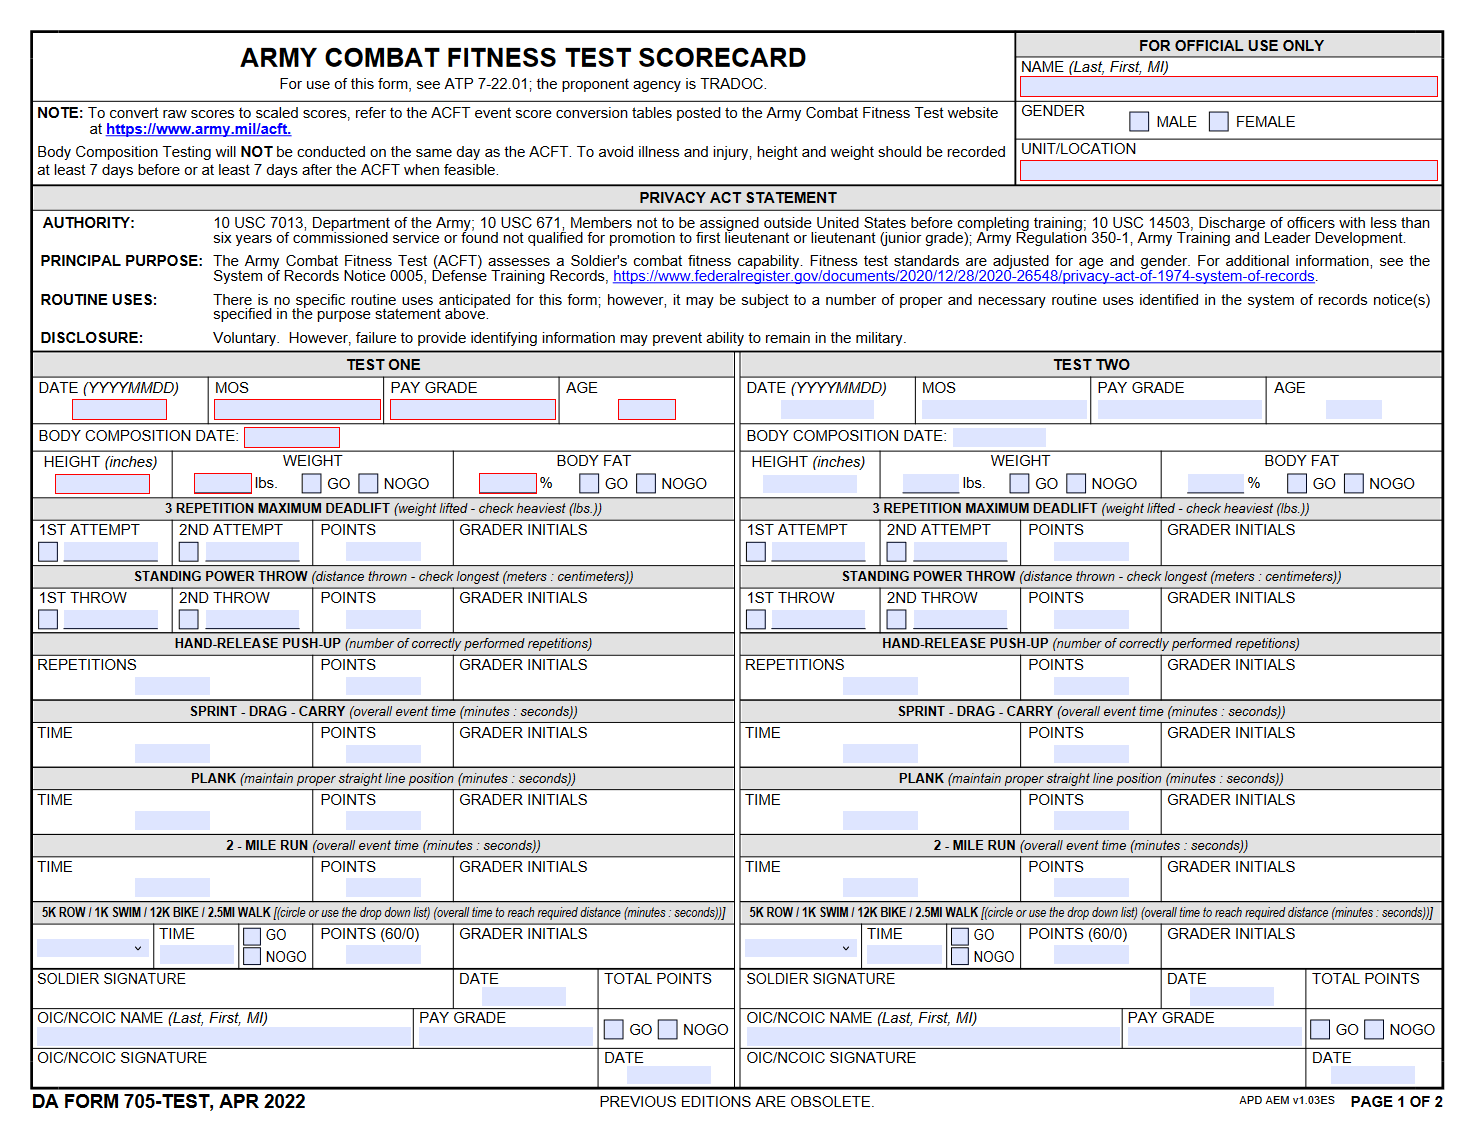 da-form-705-army-physical-fitness-test-scorecard-forms-docs-2023